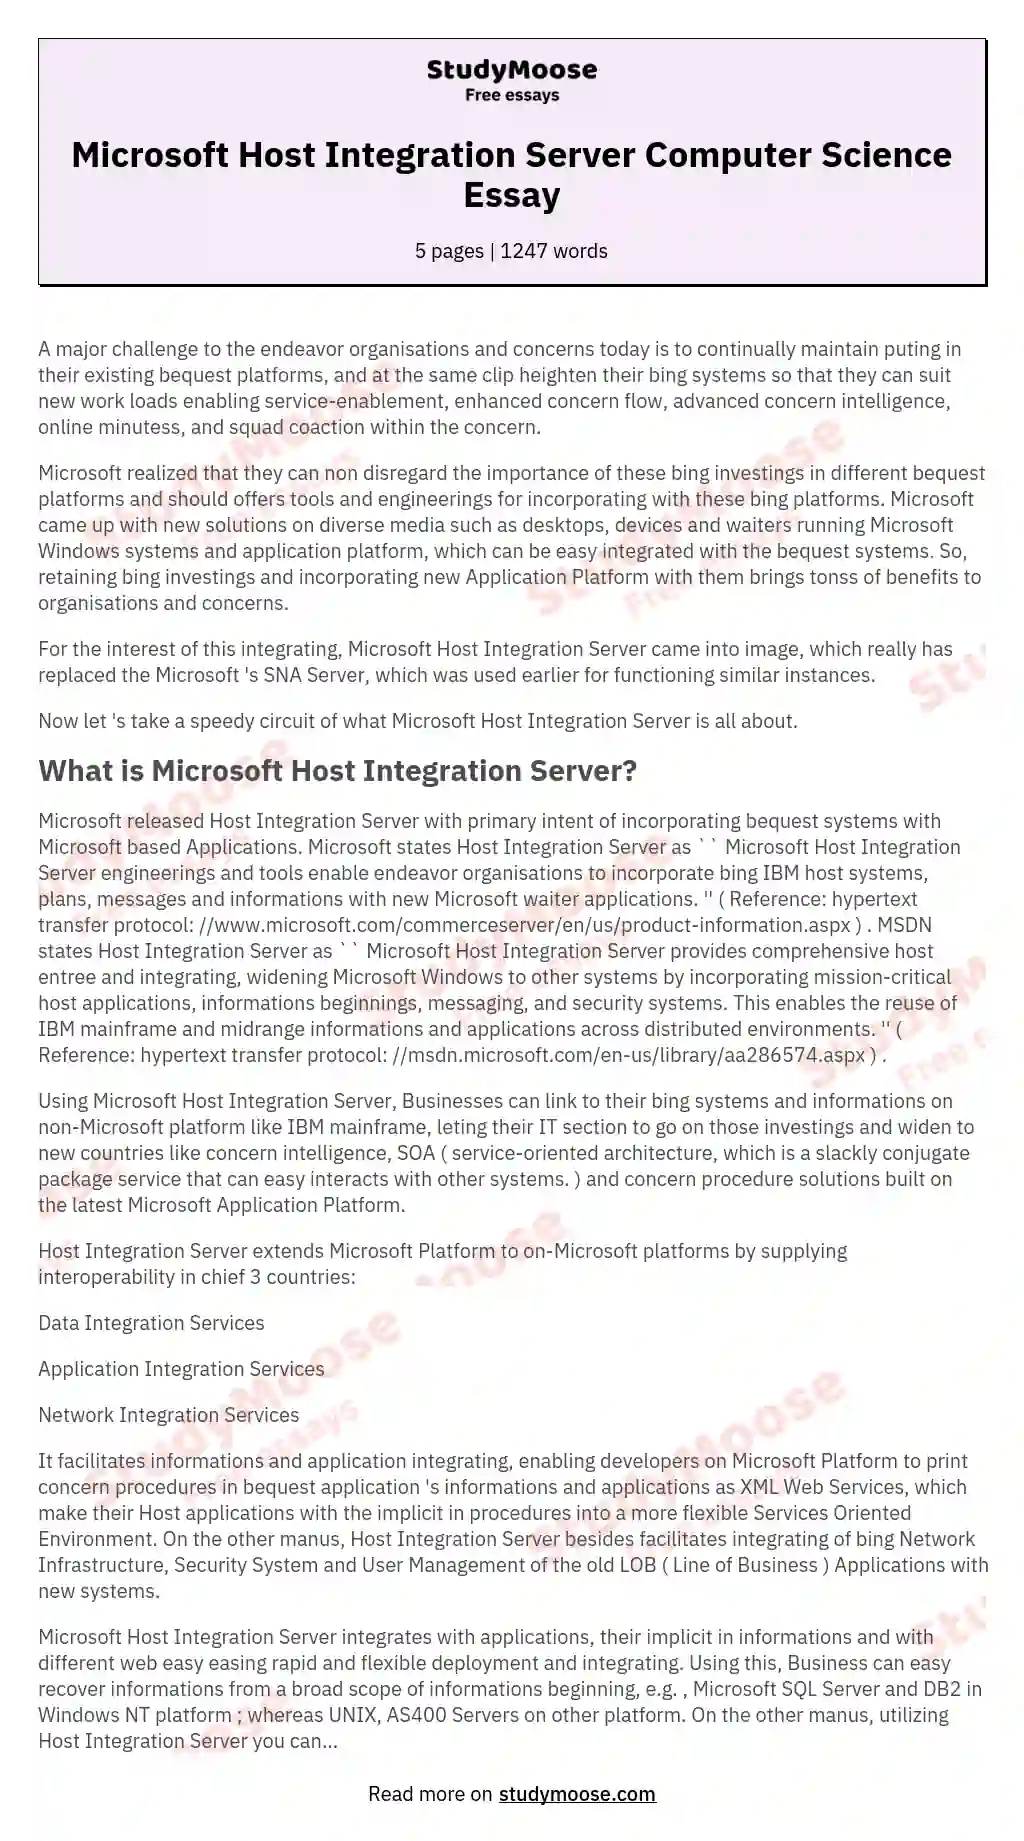 Microsoft Host Integration Server Computer Science Essay